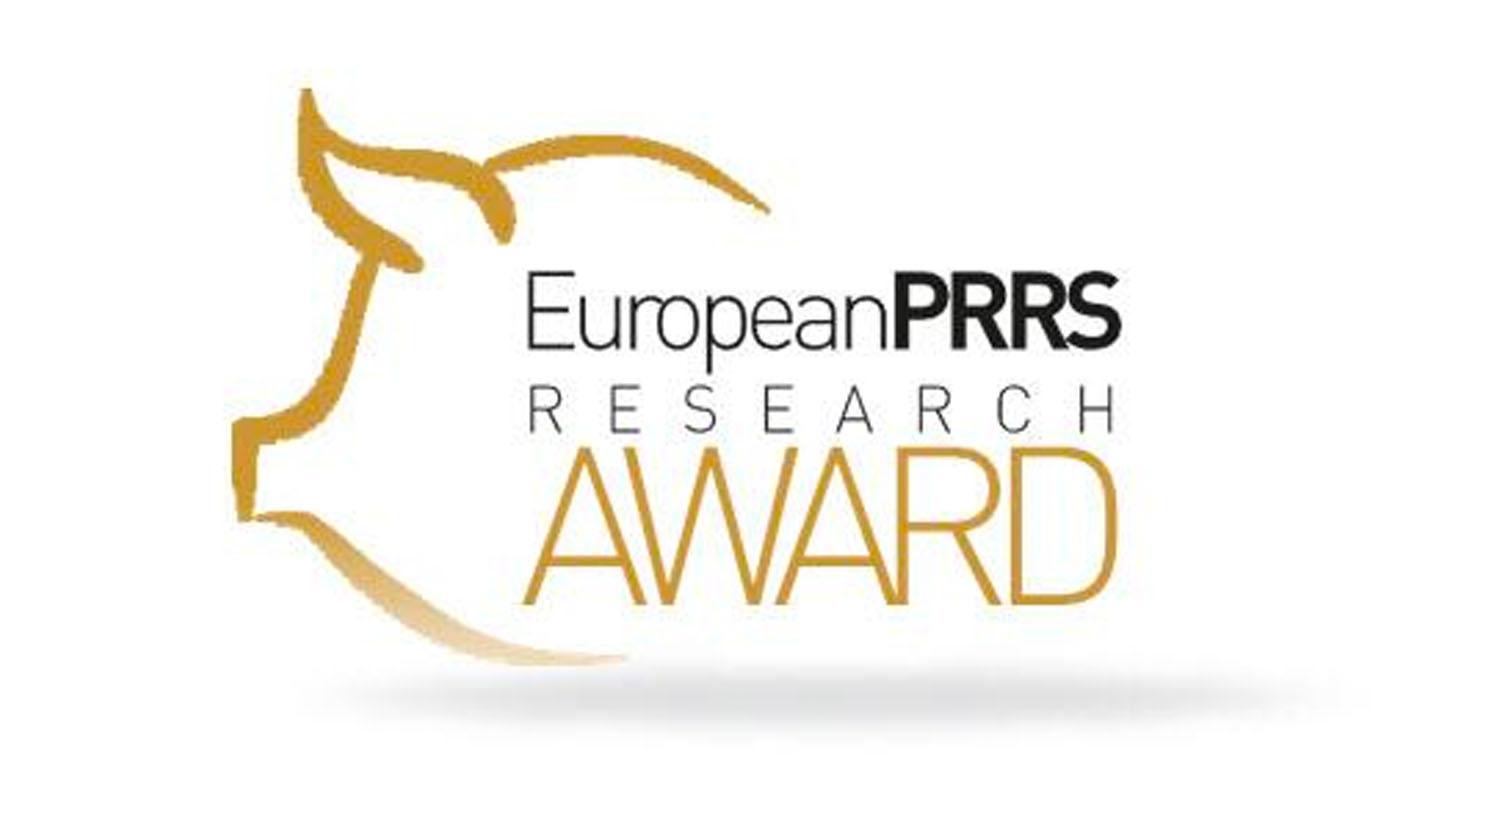 European PRRS Research Award